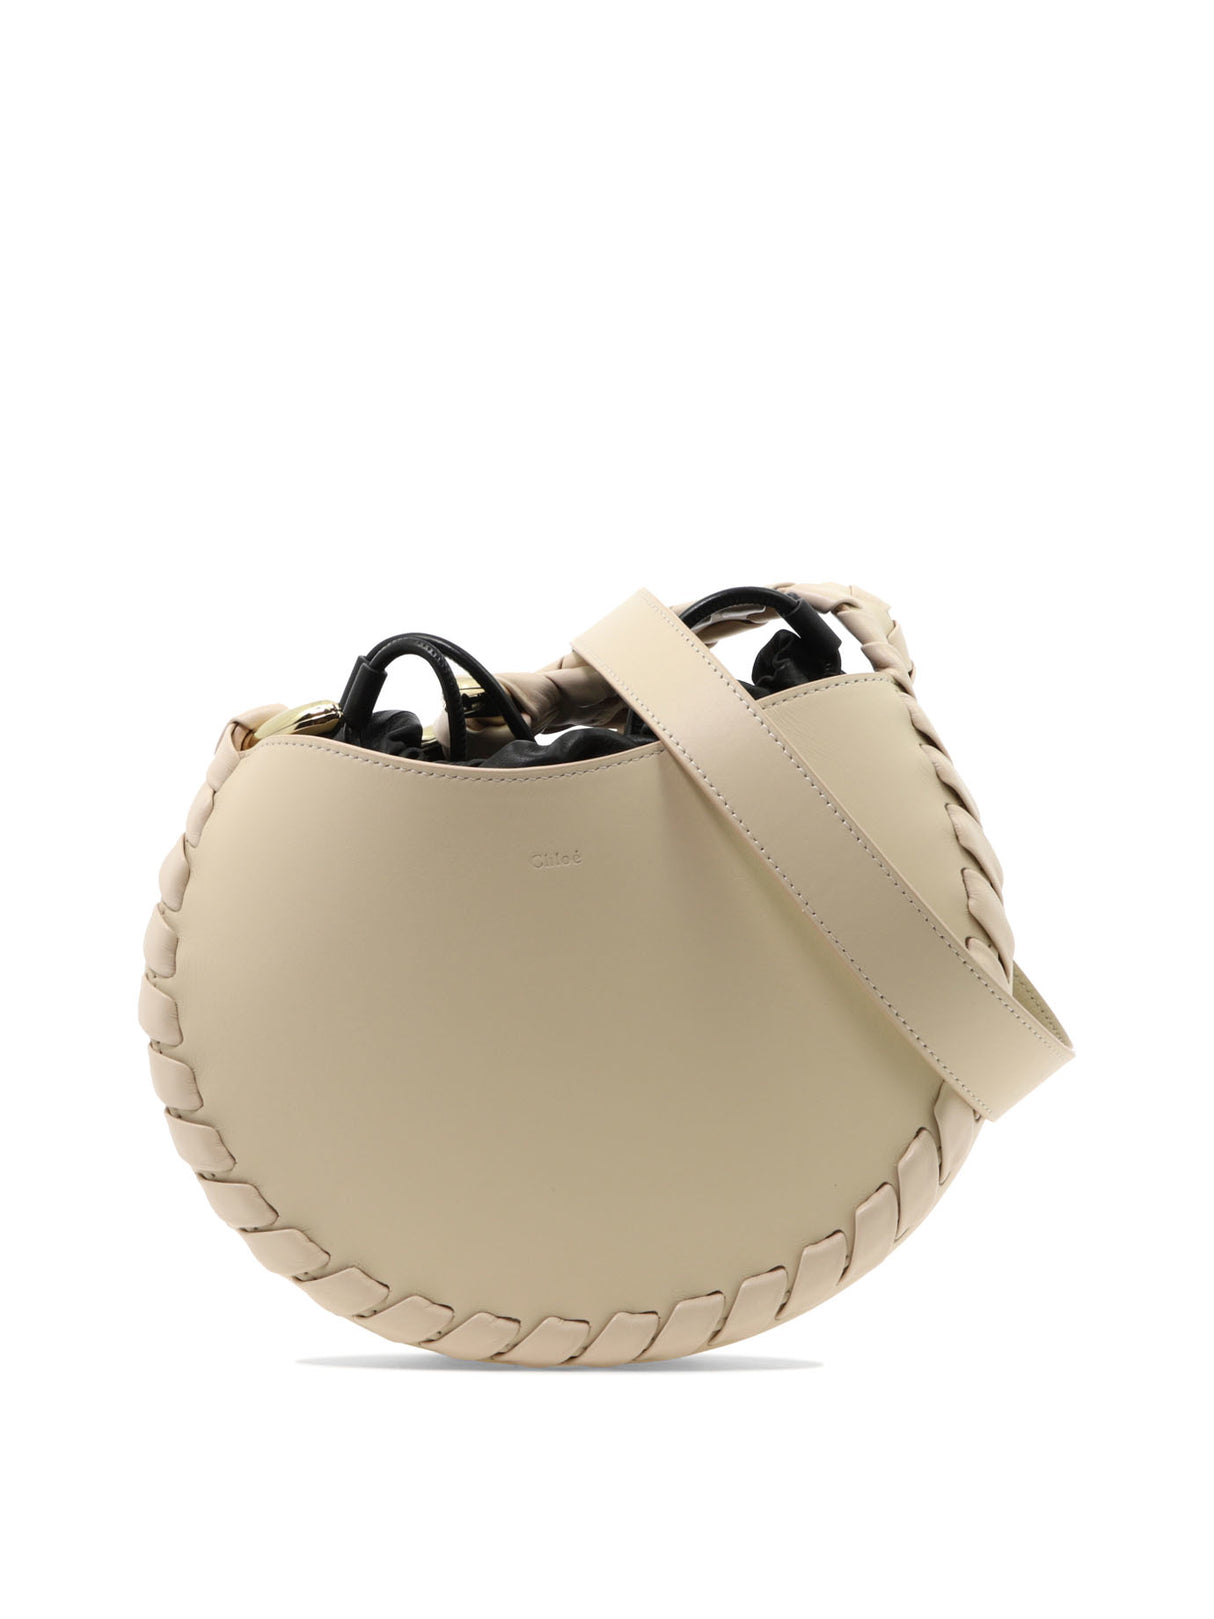 CHLOÉ Beige Crossbody Handbag for Women - FW22 Collection